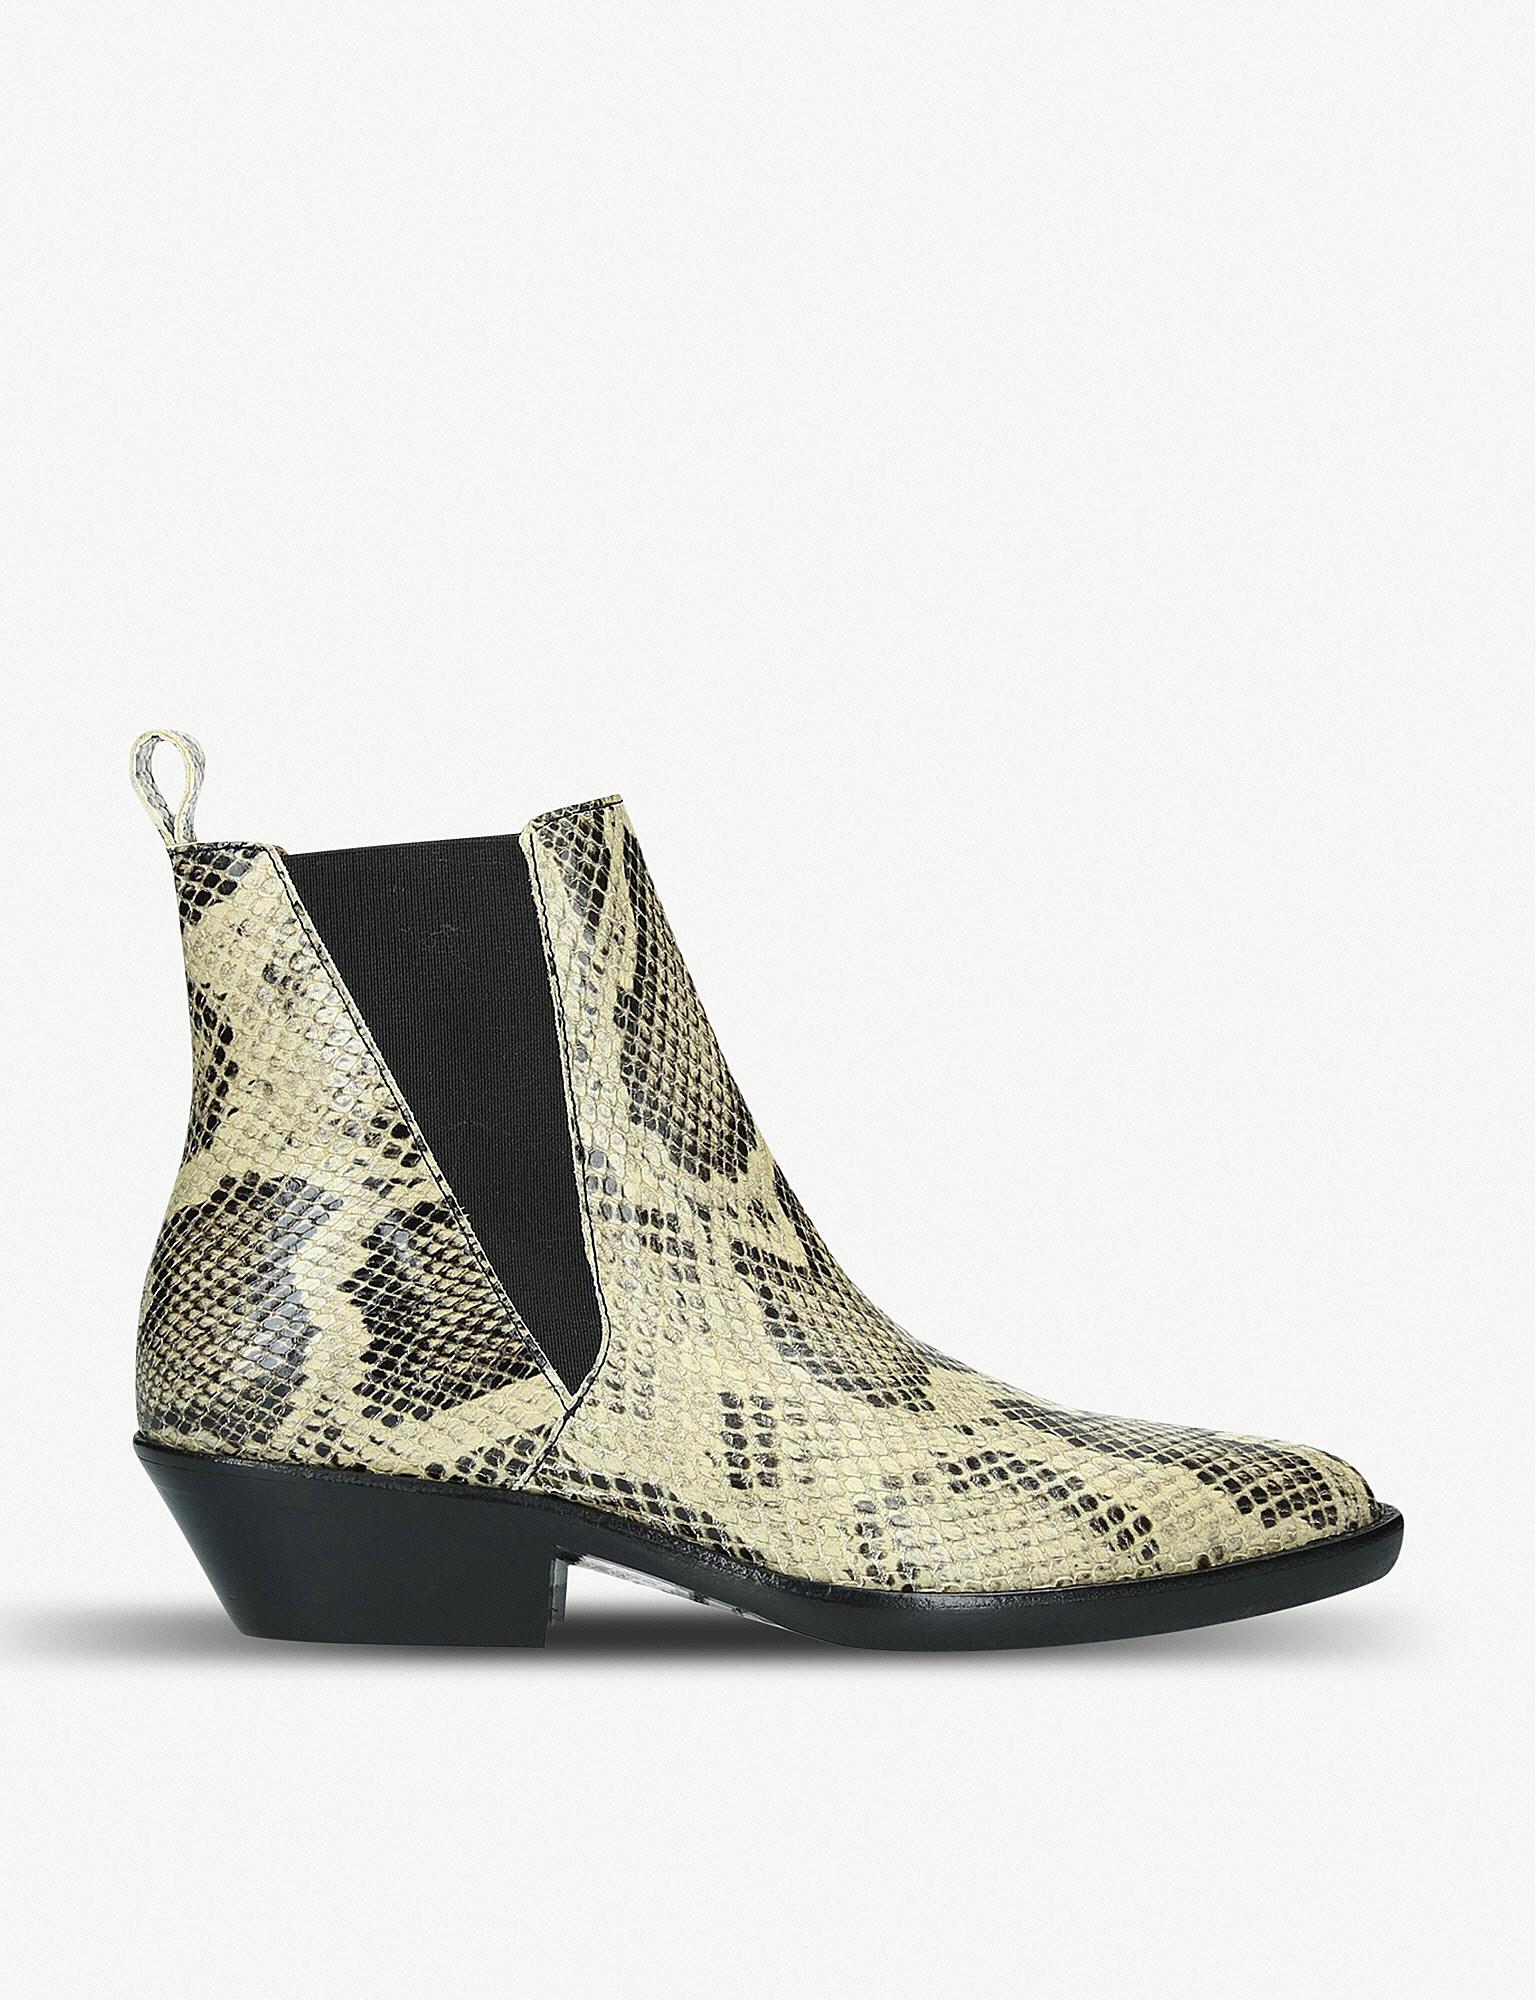 Lyst - Isabel Marant Drenky Snakeskin-print Leather Ankle Boots